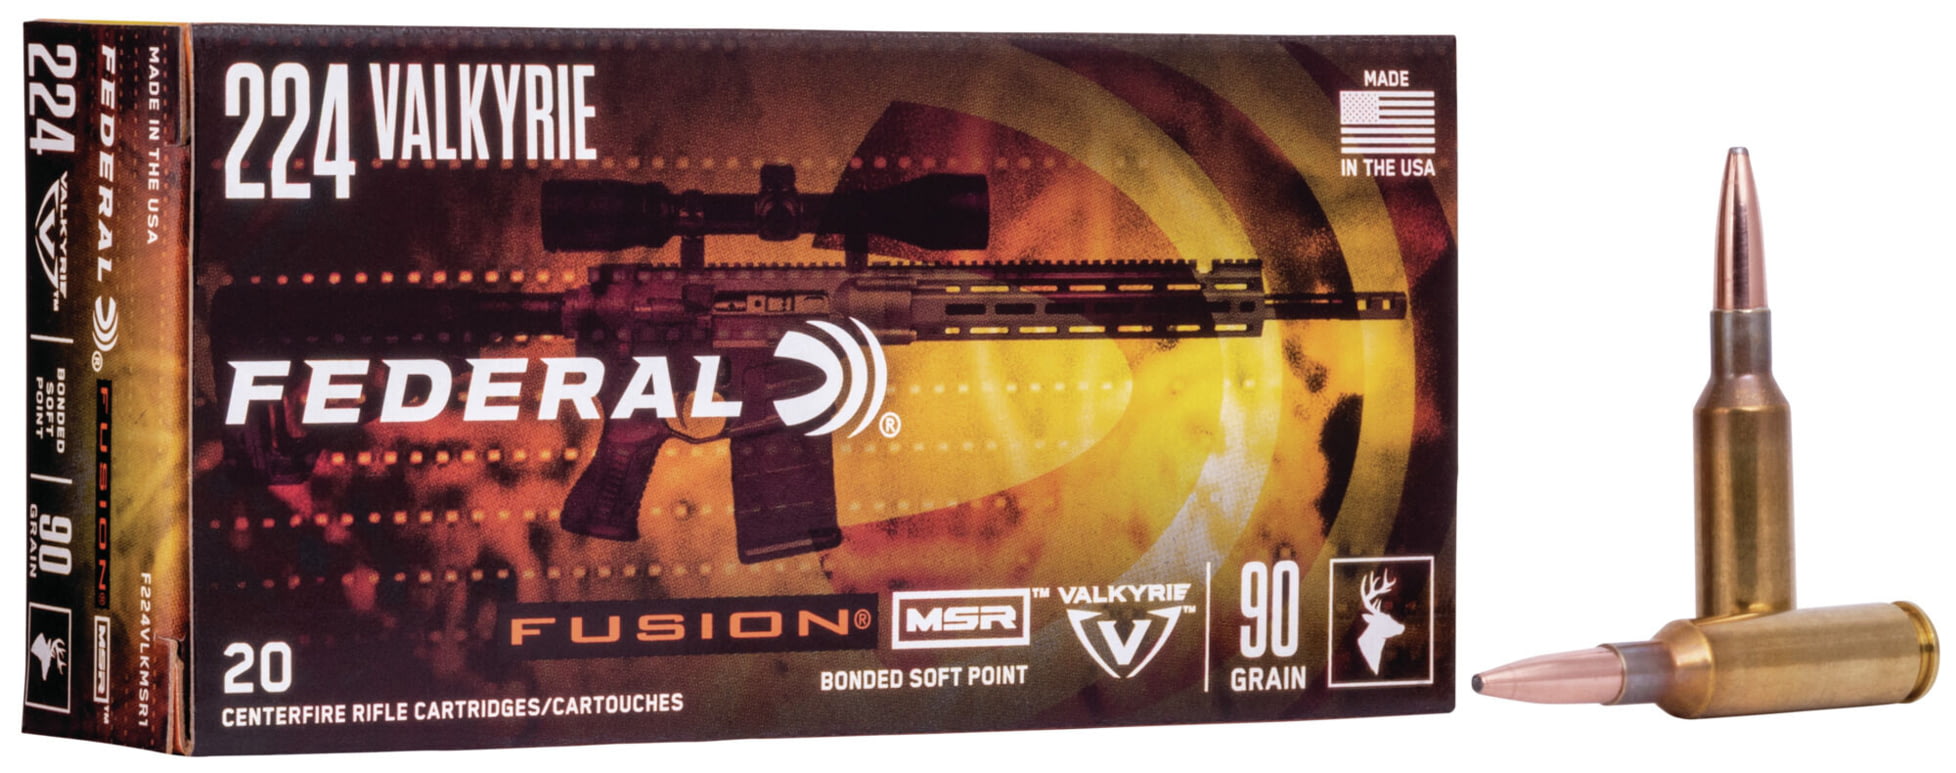 Federal Premium FUSION .224 Valkyrie 90 grain Fusion Soft Point Centerfire Rifle Ammunition